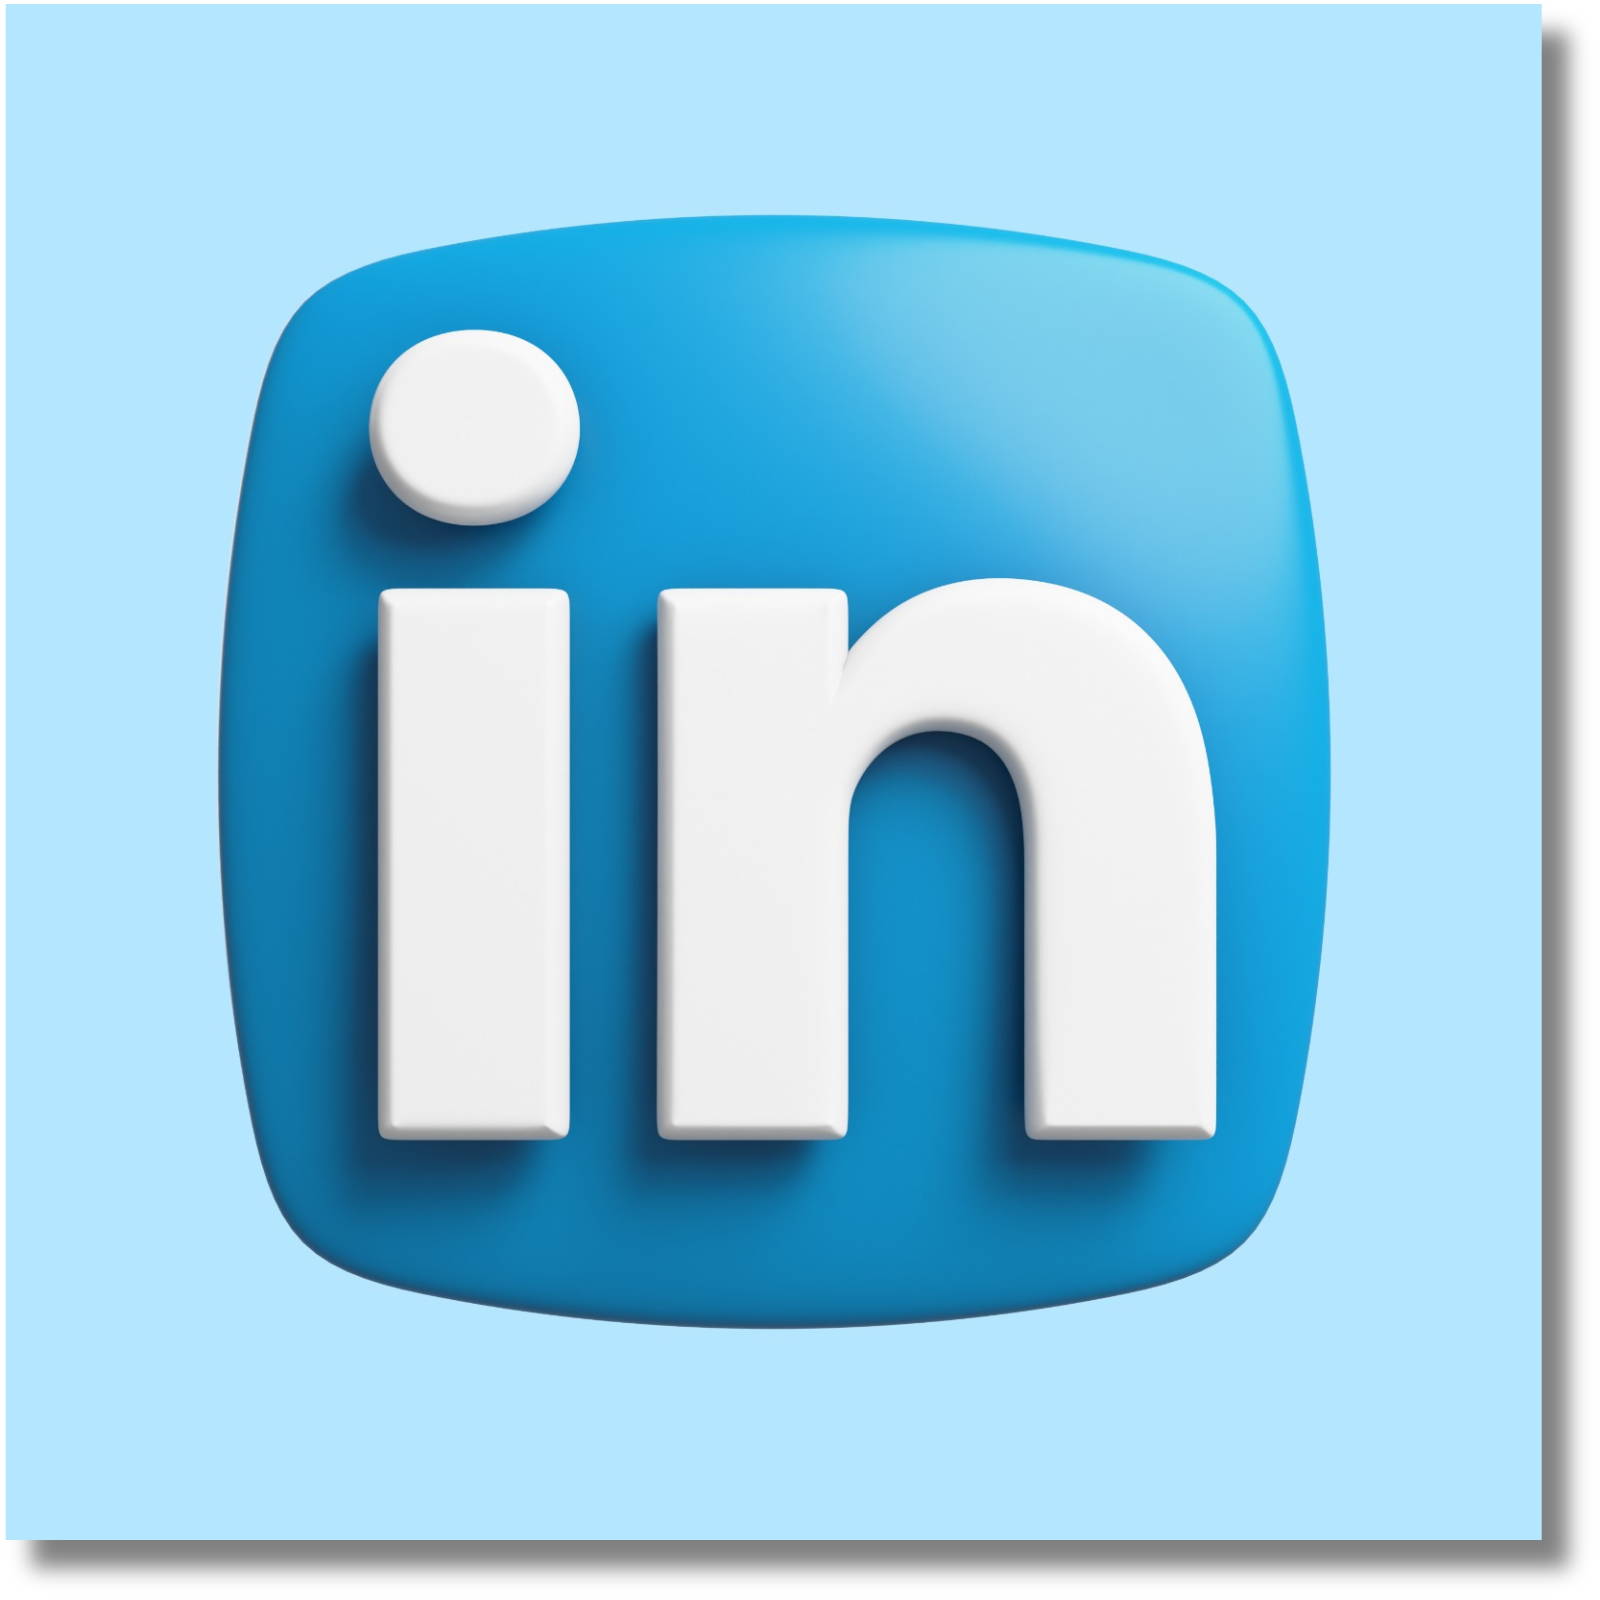 Social media icons: LinkedIn